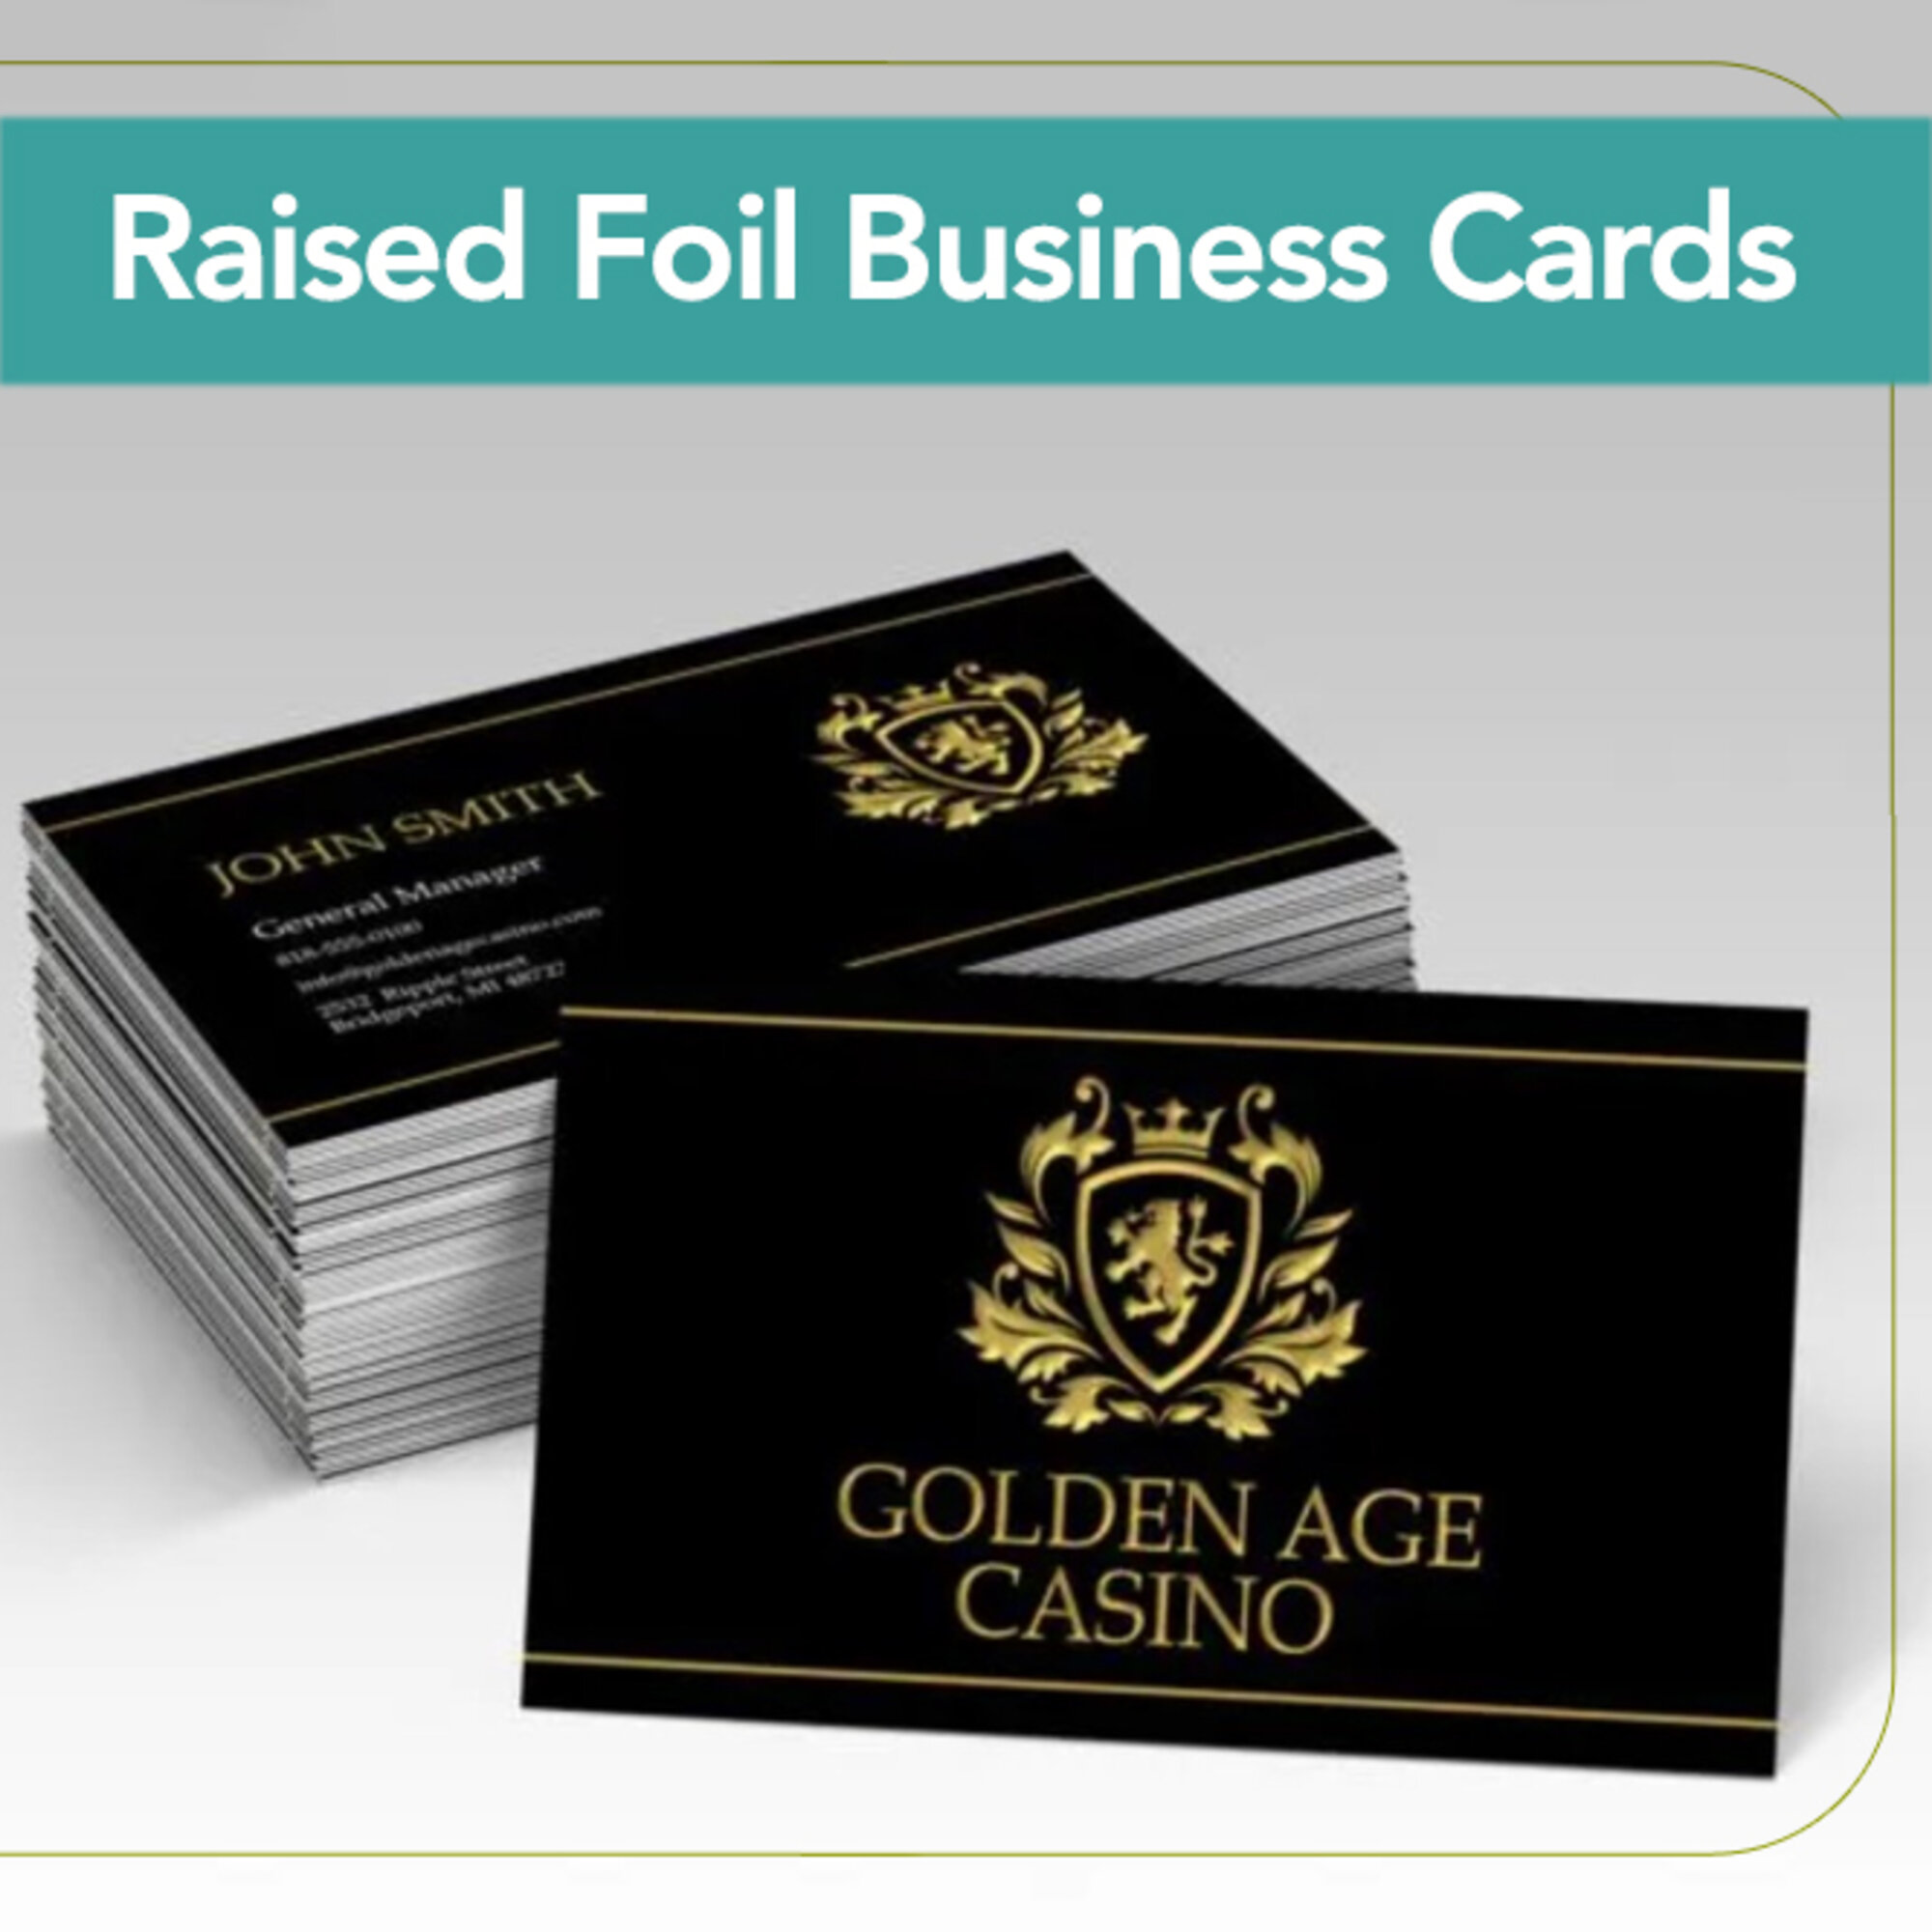 Raised Foil Business Cards